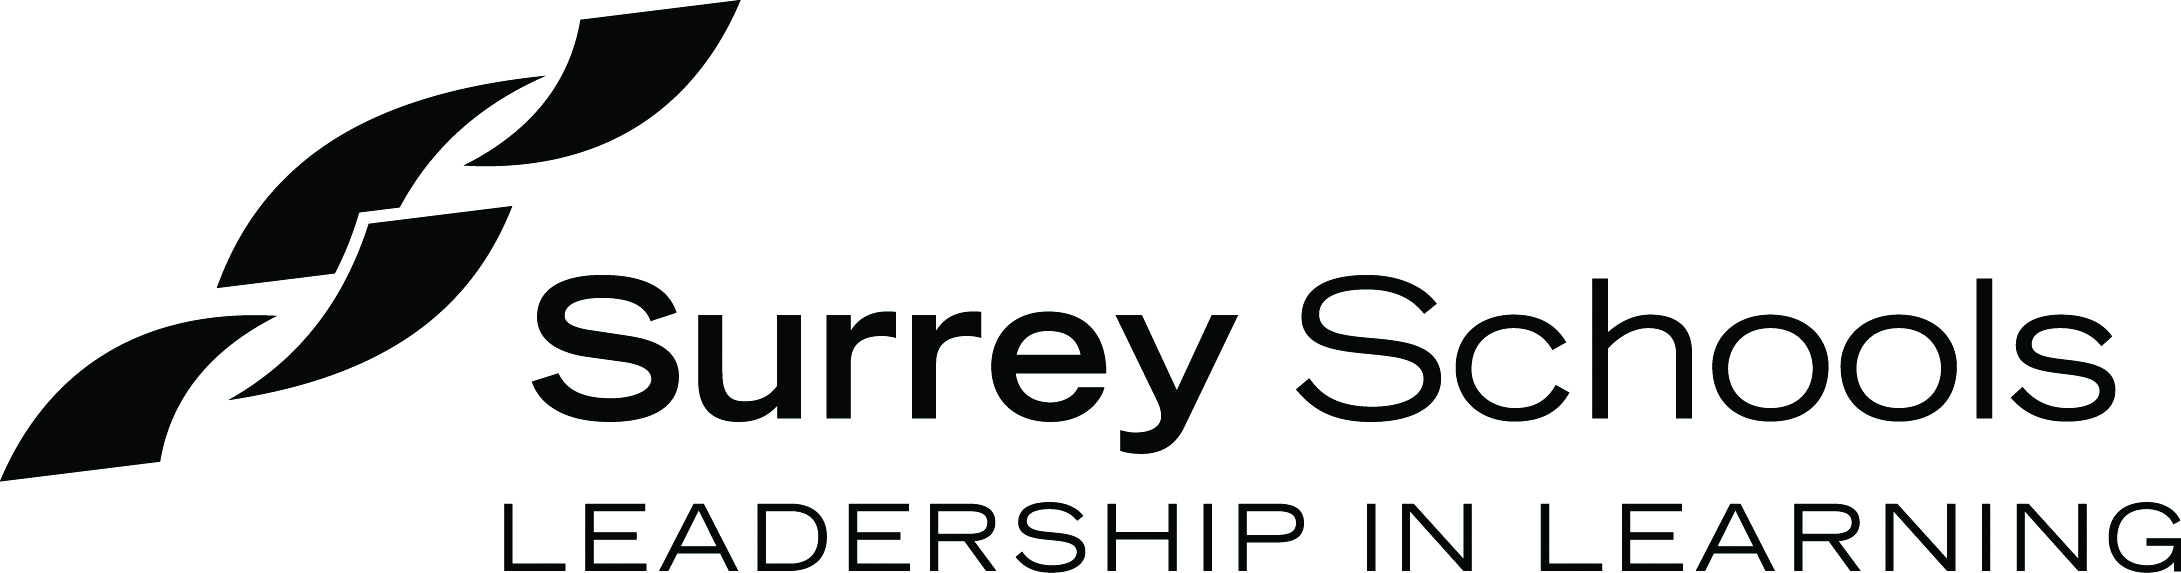 surrey-schools-logo-black.2d3b09136406.jpg